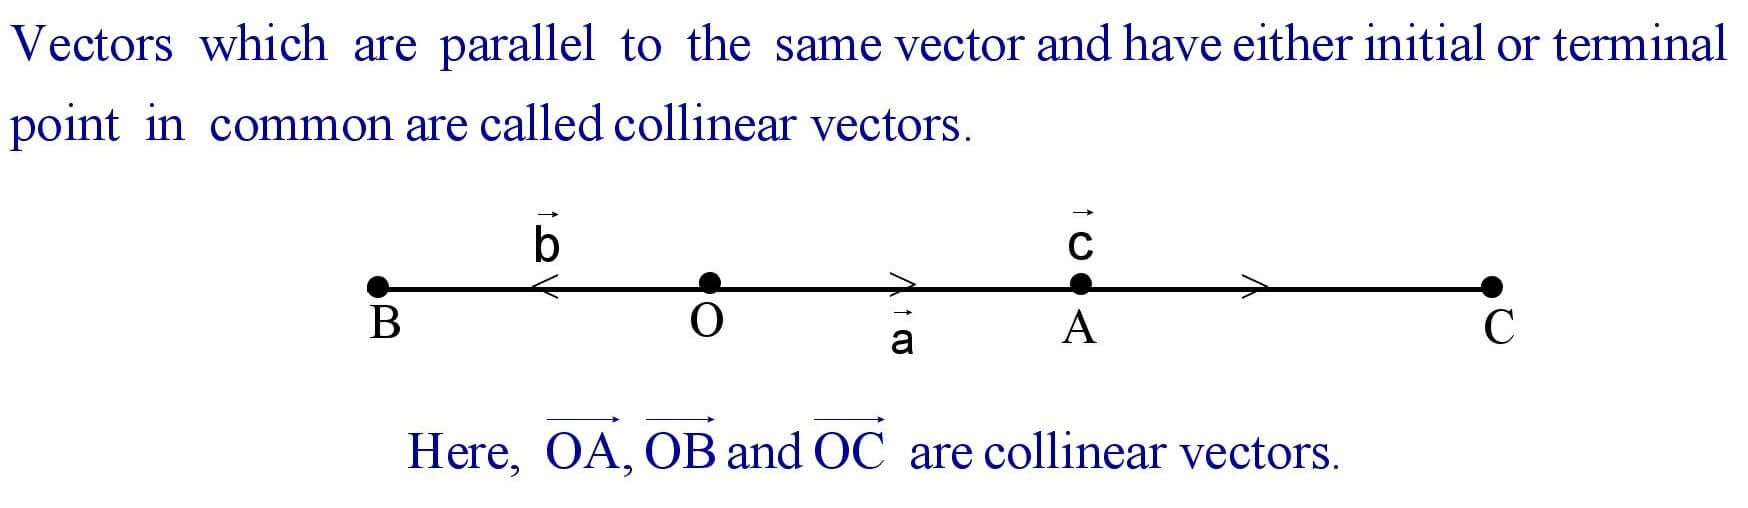 Collinear Vectors